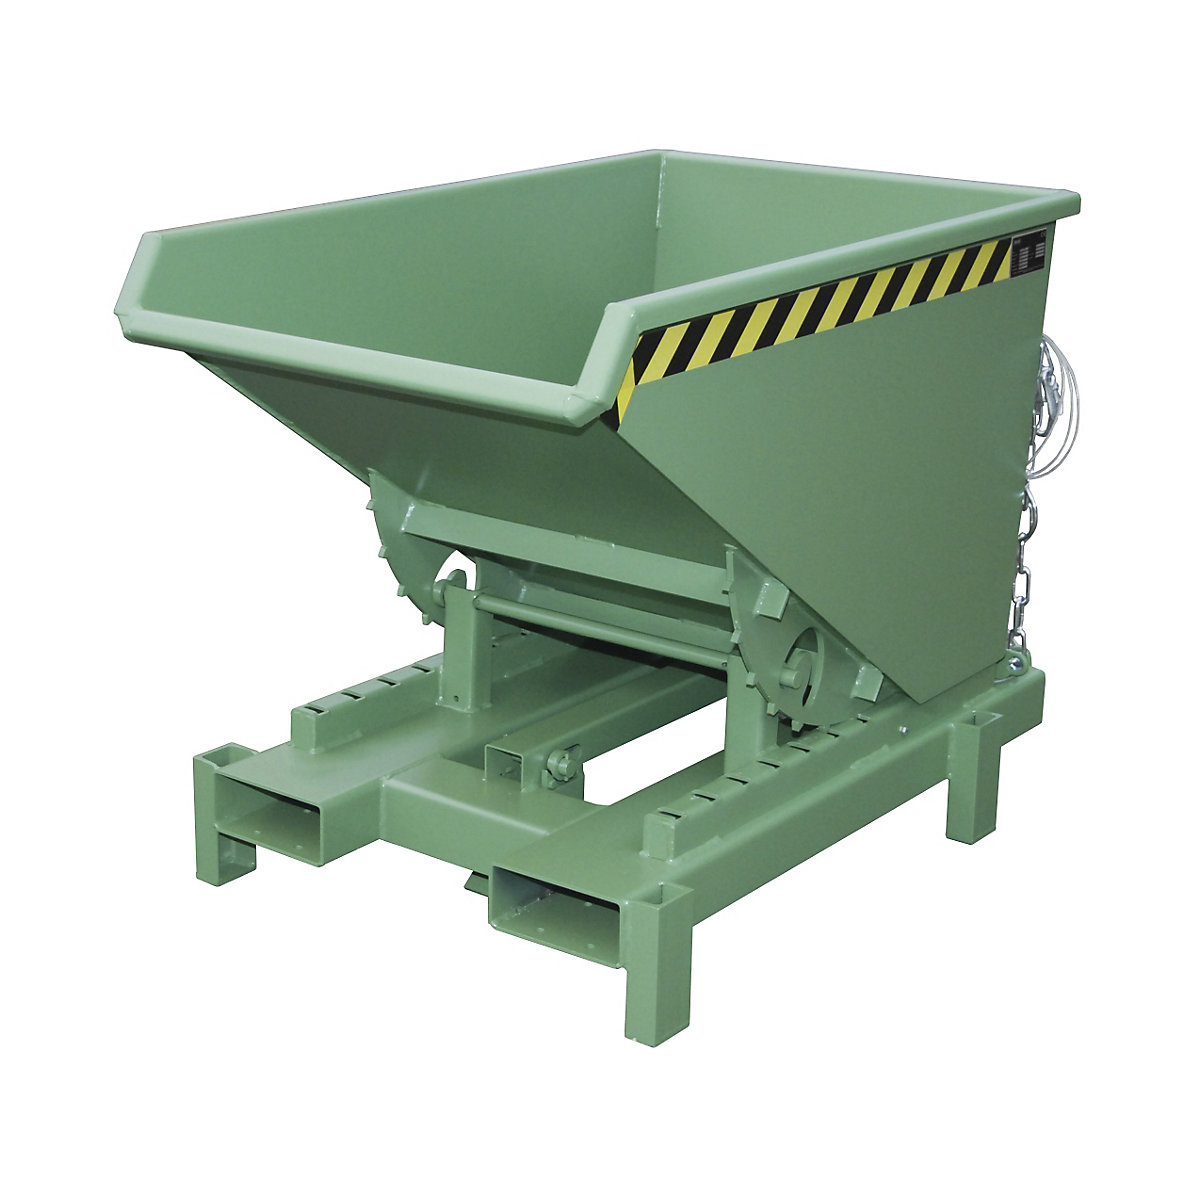 Volquete para cargas pesadas – eurokraft pro, capacidad 0,3 m³, carga máx. 4000 kg, verde RAL 6011-9